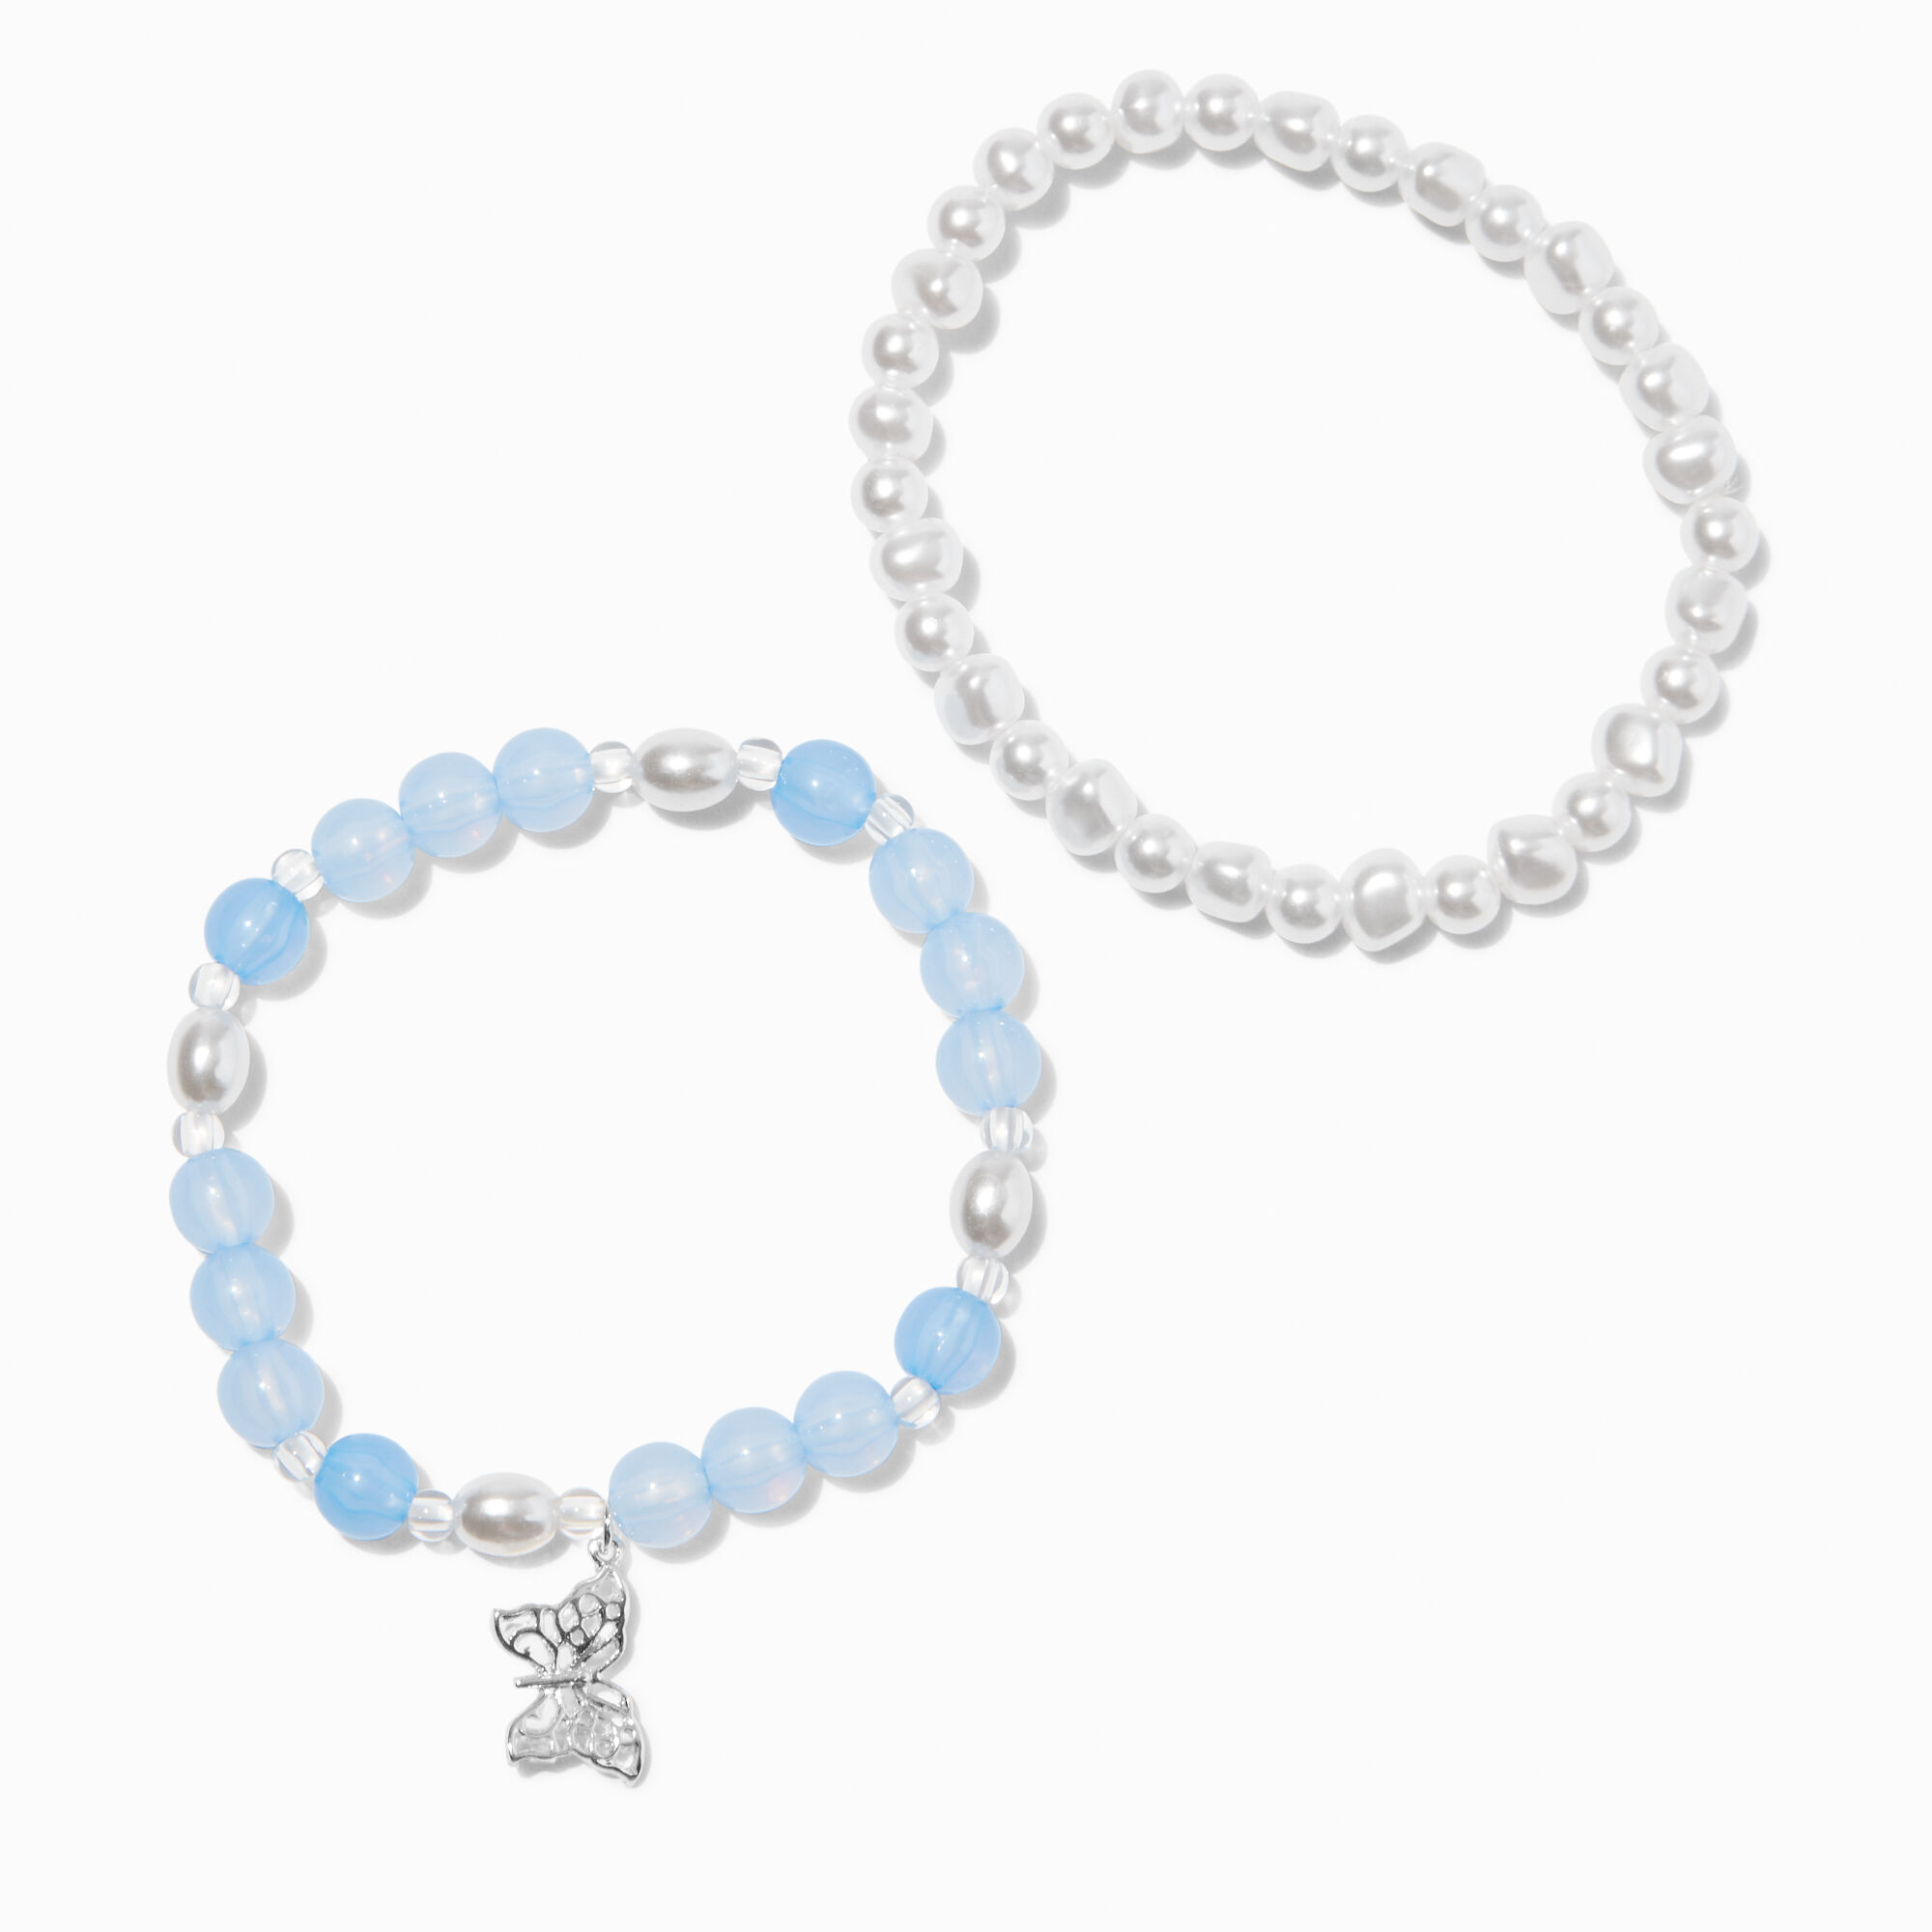 View Claires Iridescent Bead Bracelet Set 2 Pack Blue information